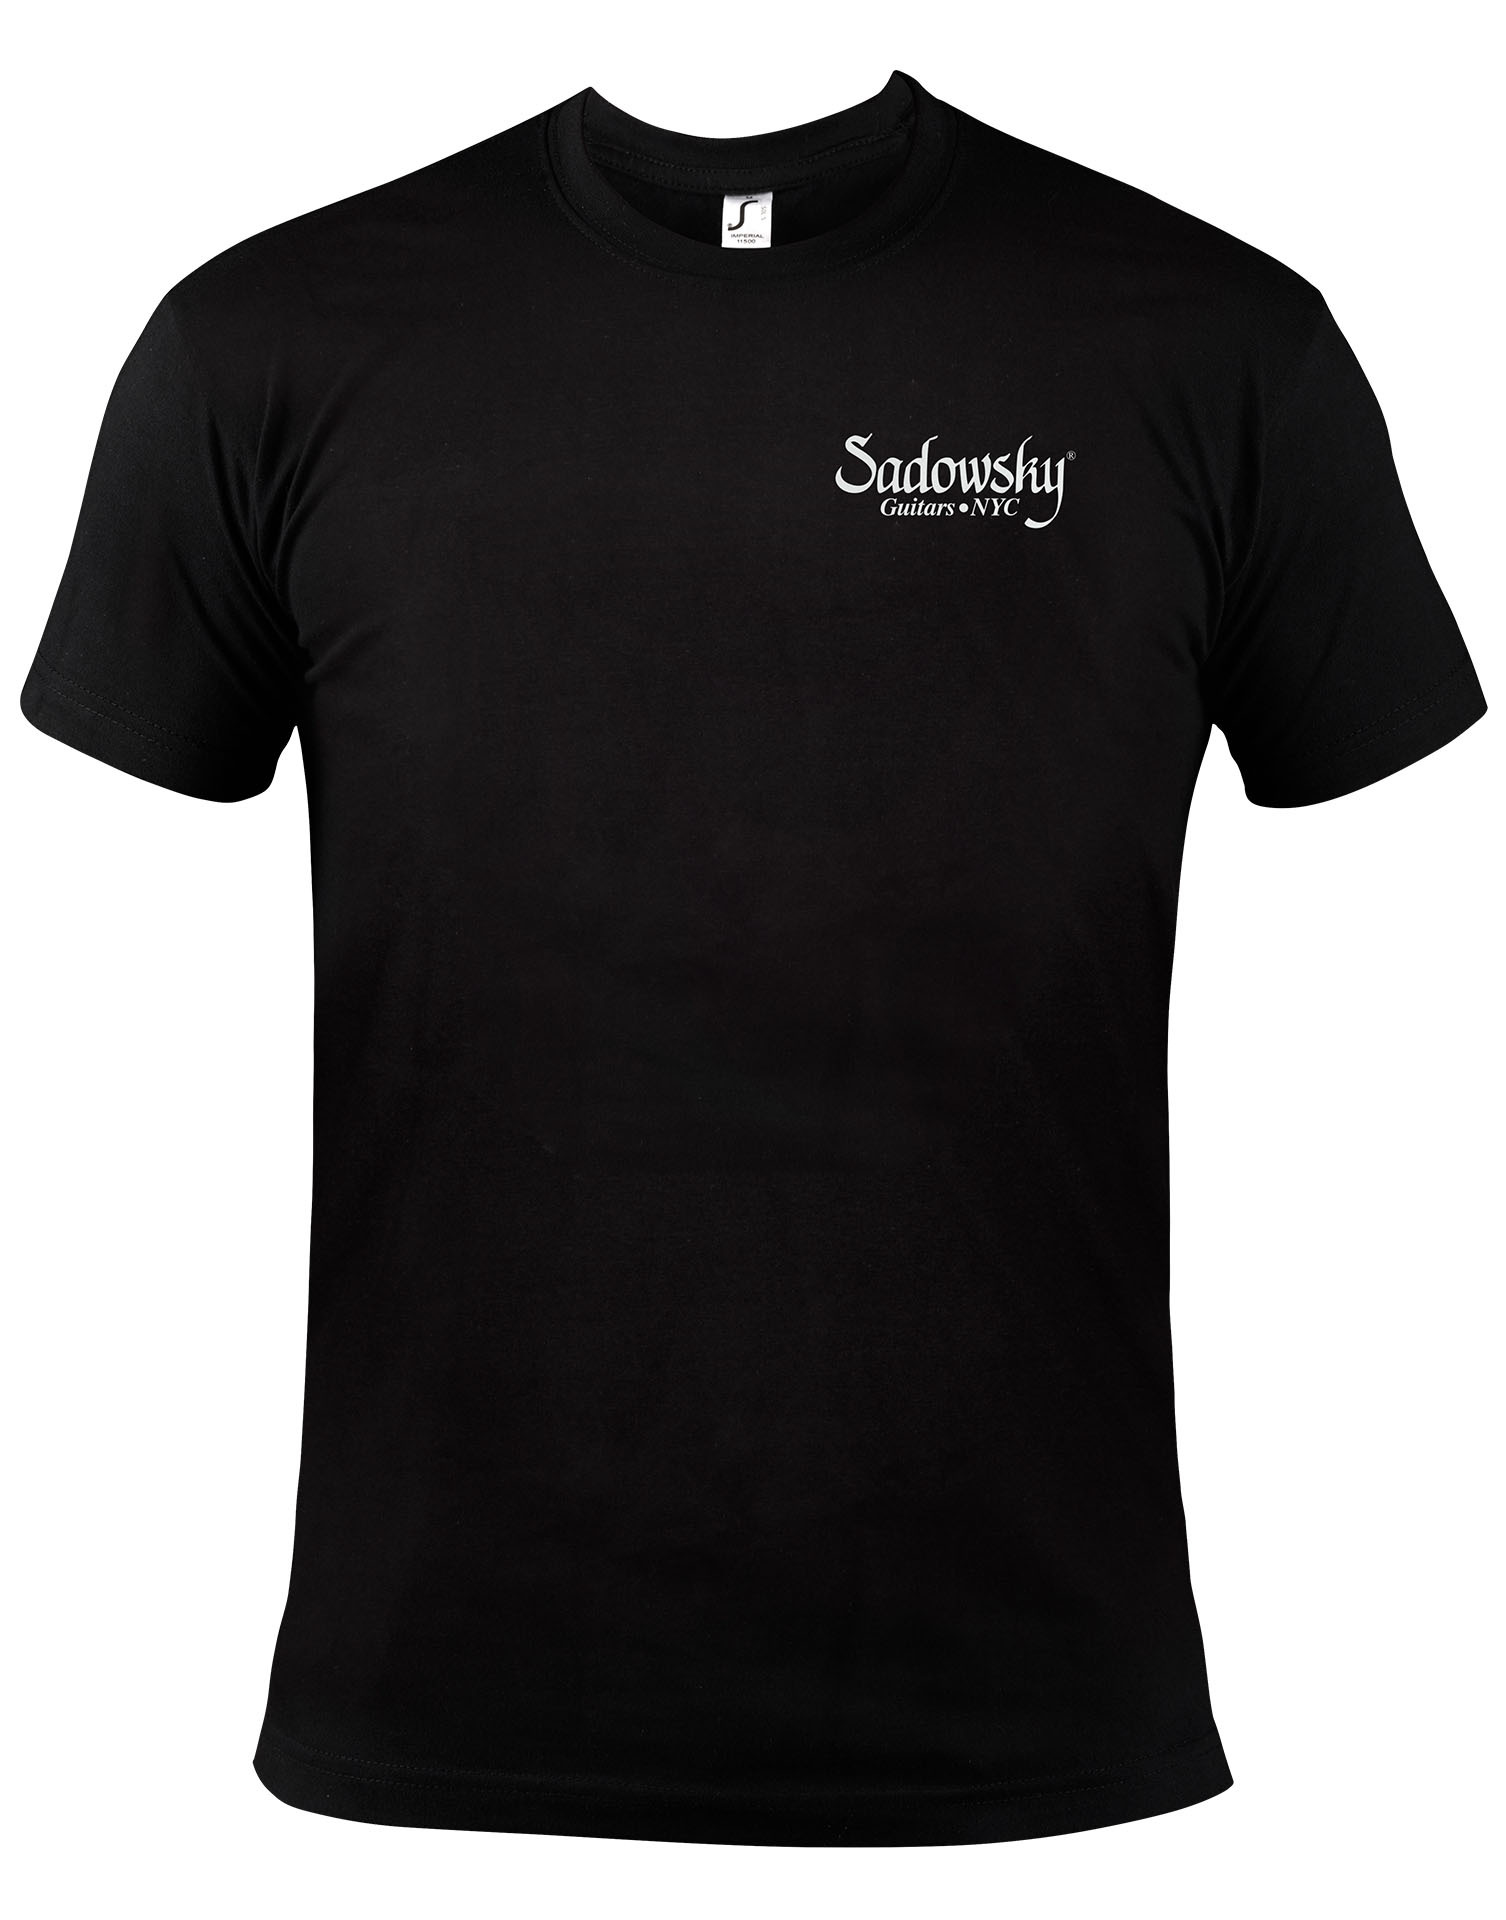 Sadowsky Promo - Logo T-Shirt, Black with White Print - Size M